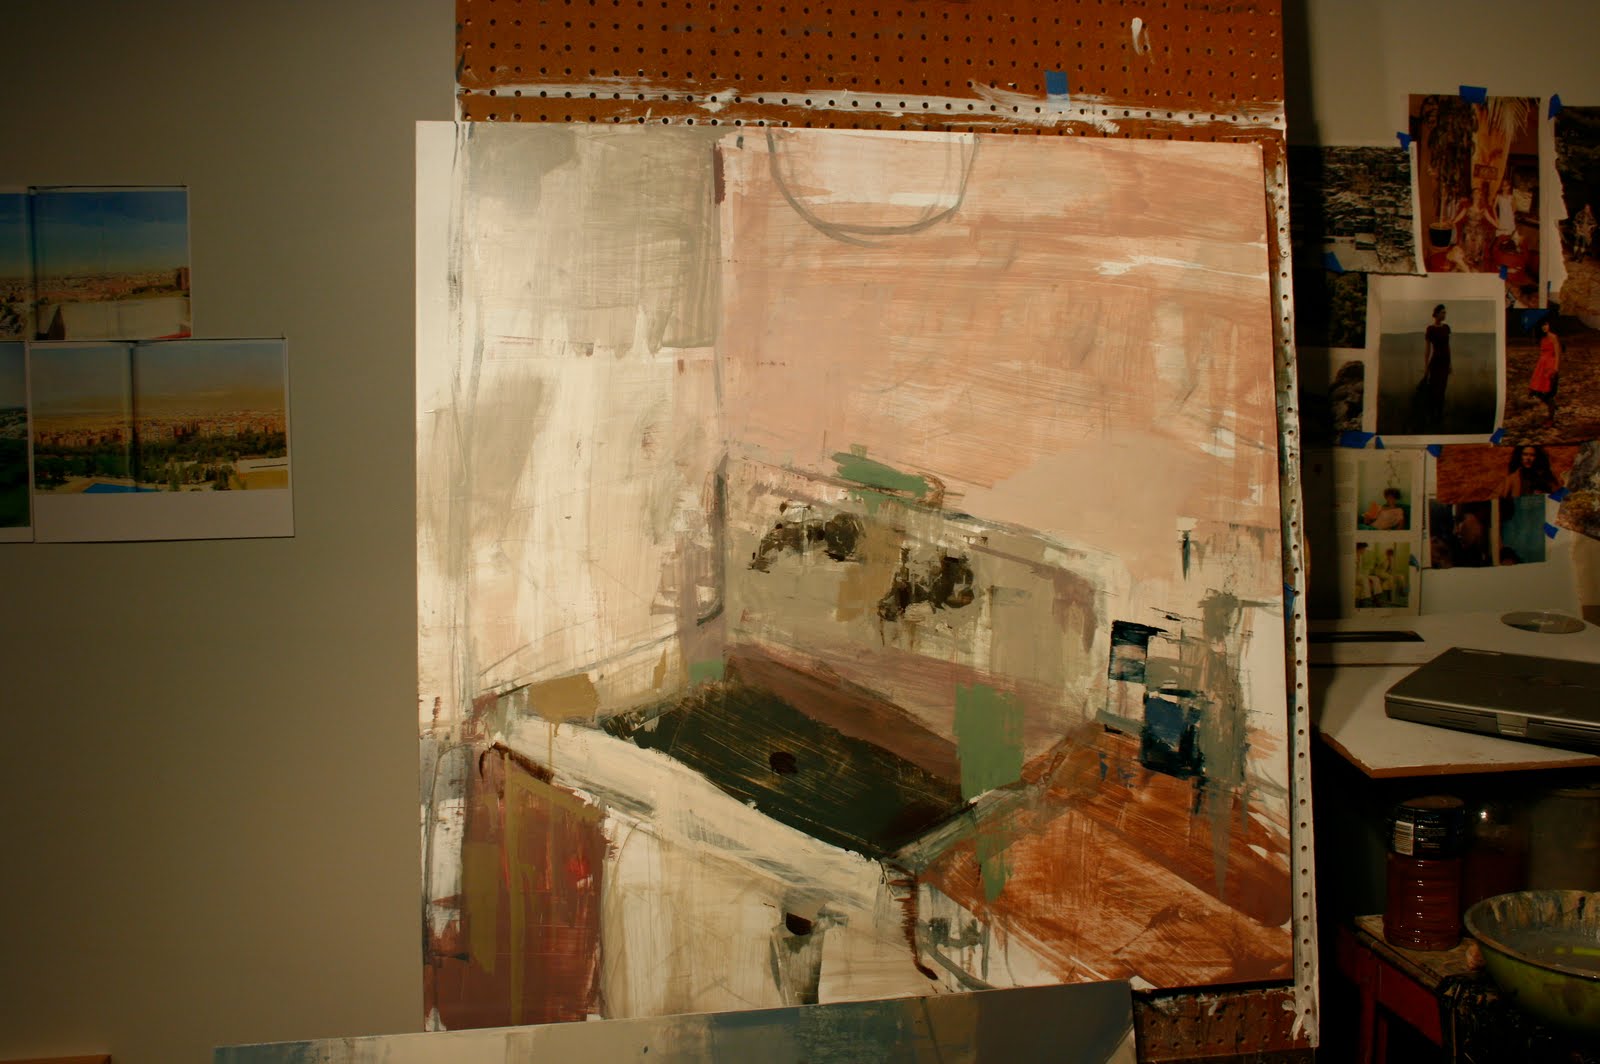 Artistic process - Chelsea James, "Utility Sink" in progress